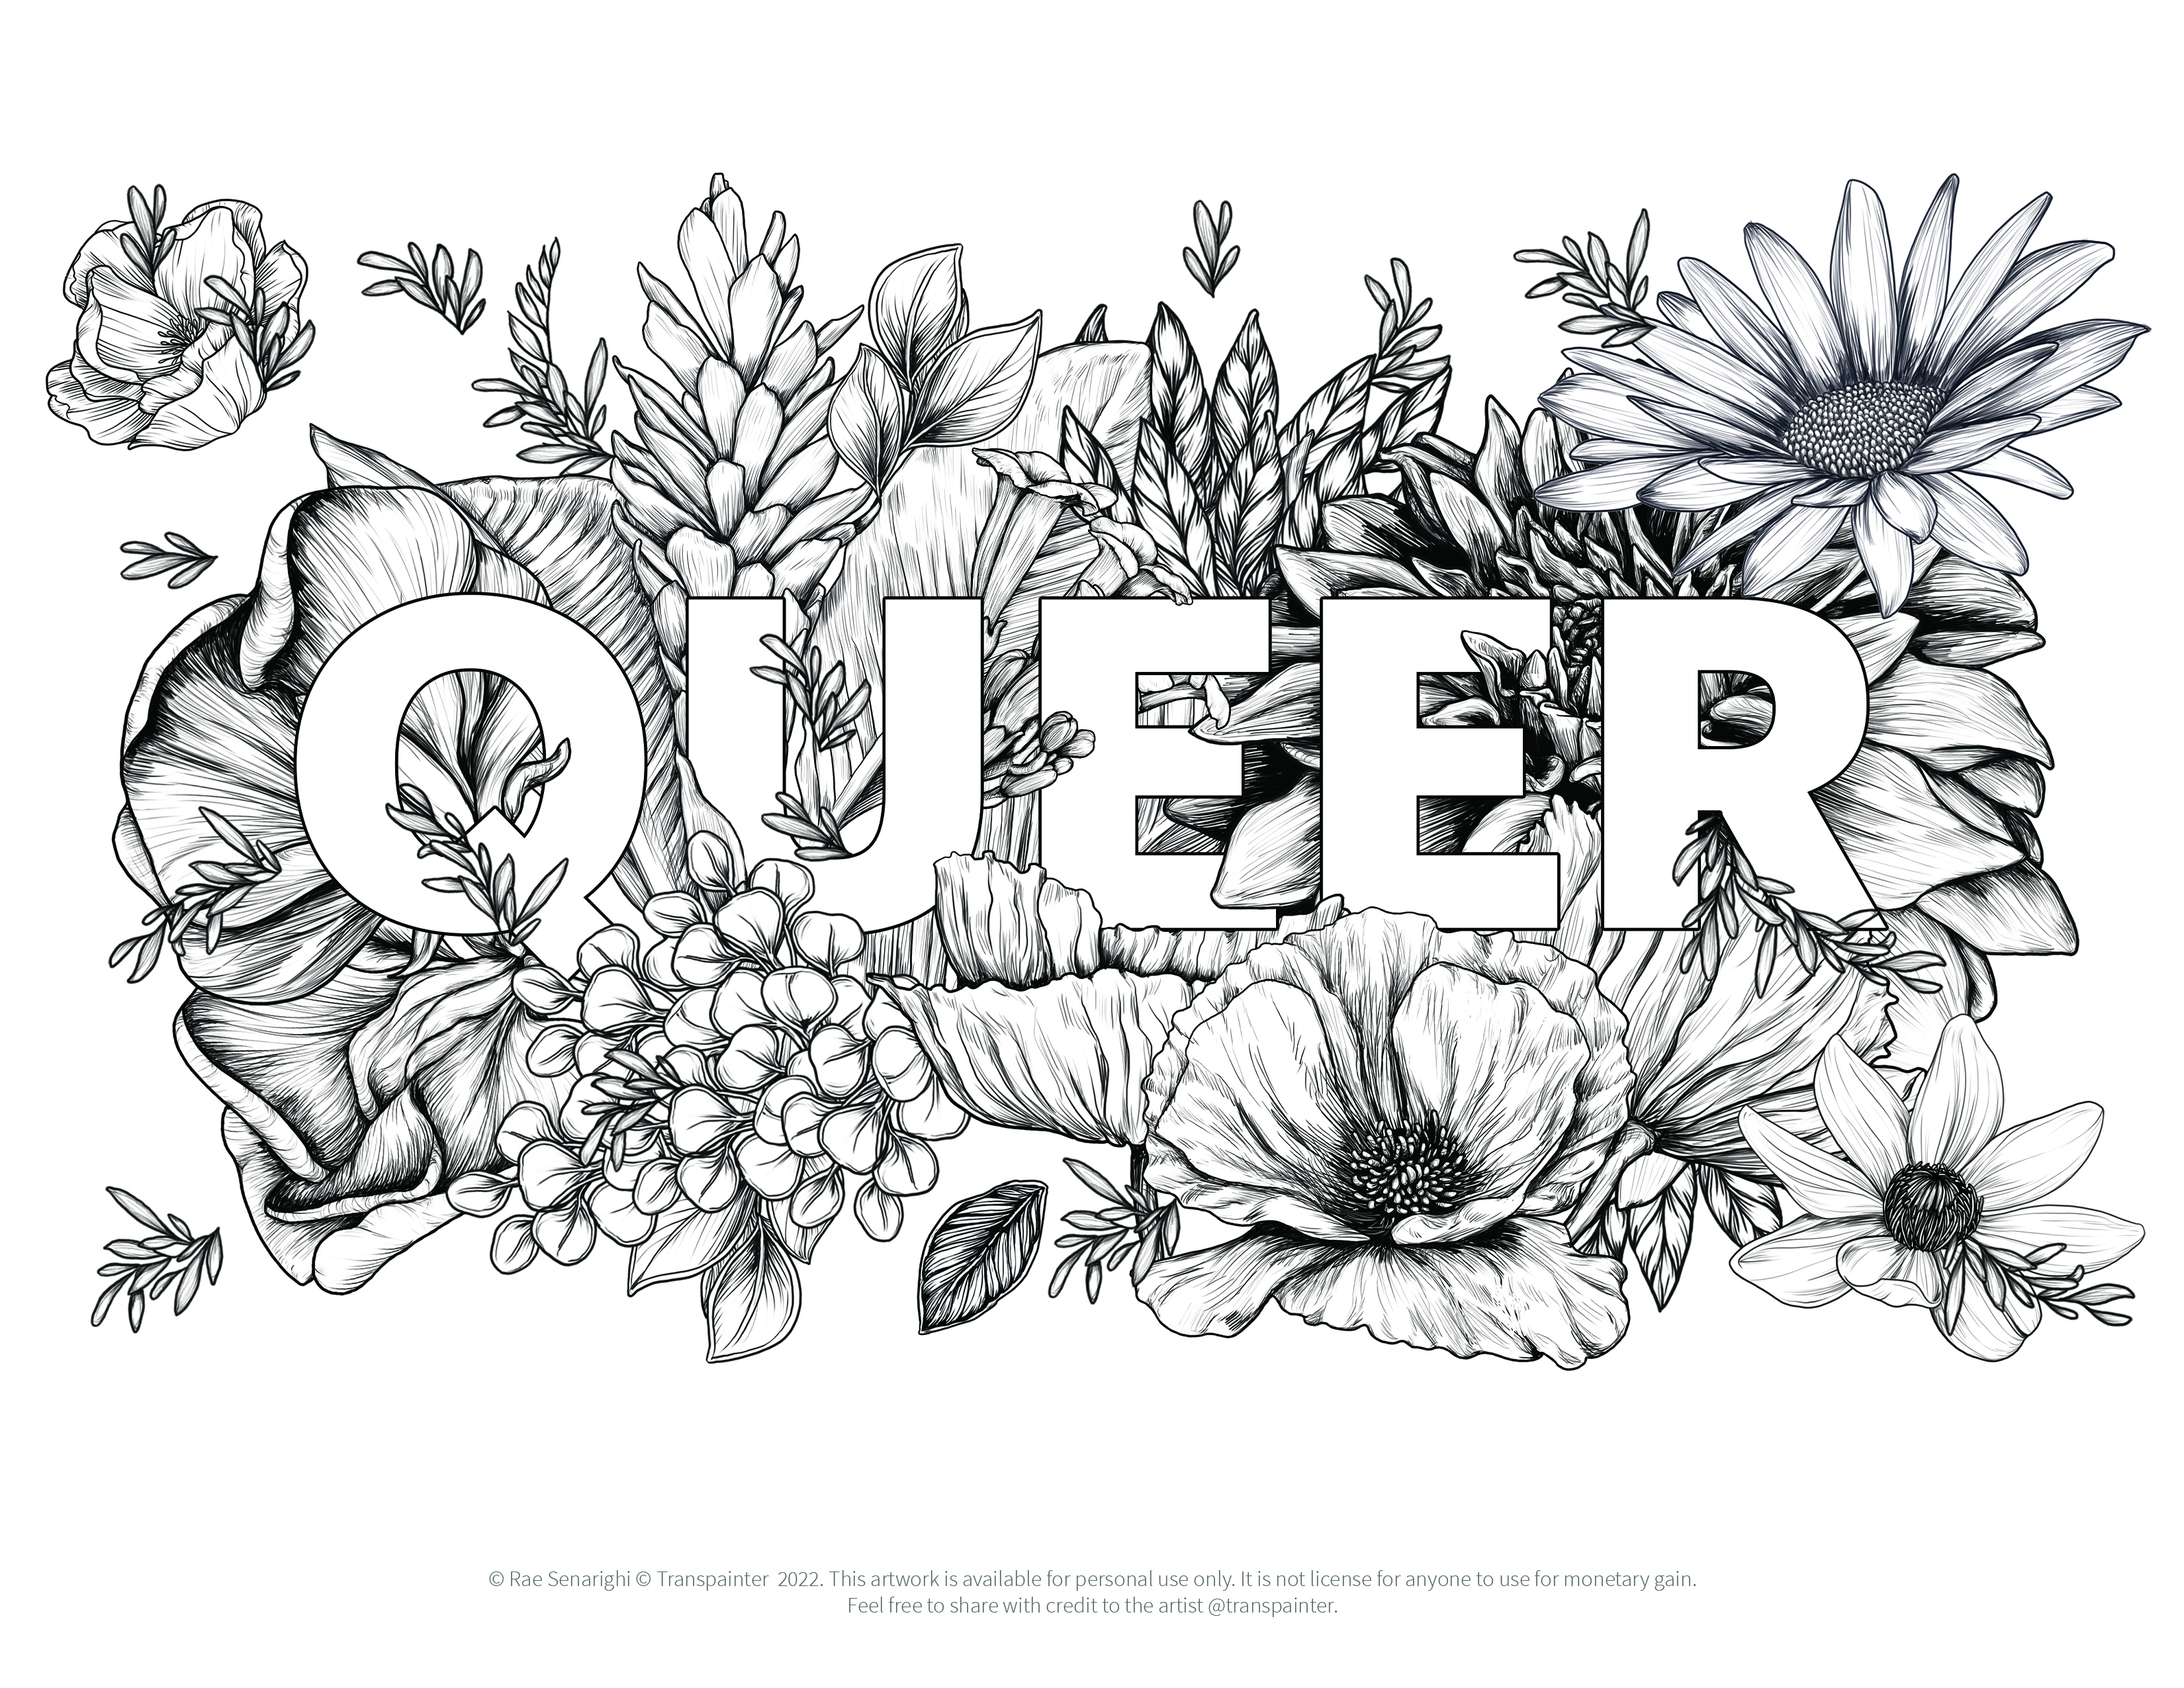 Transgender day of visibility coloring page download â rae senarighi